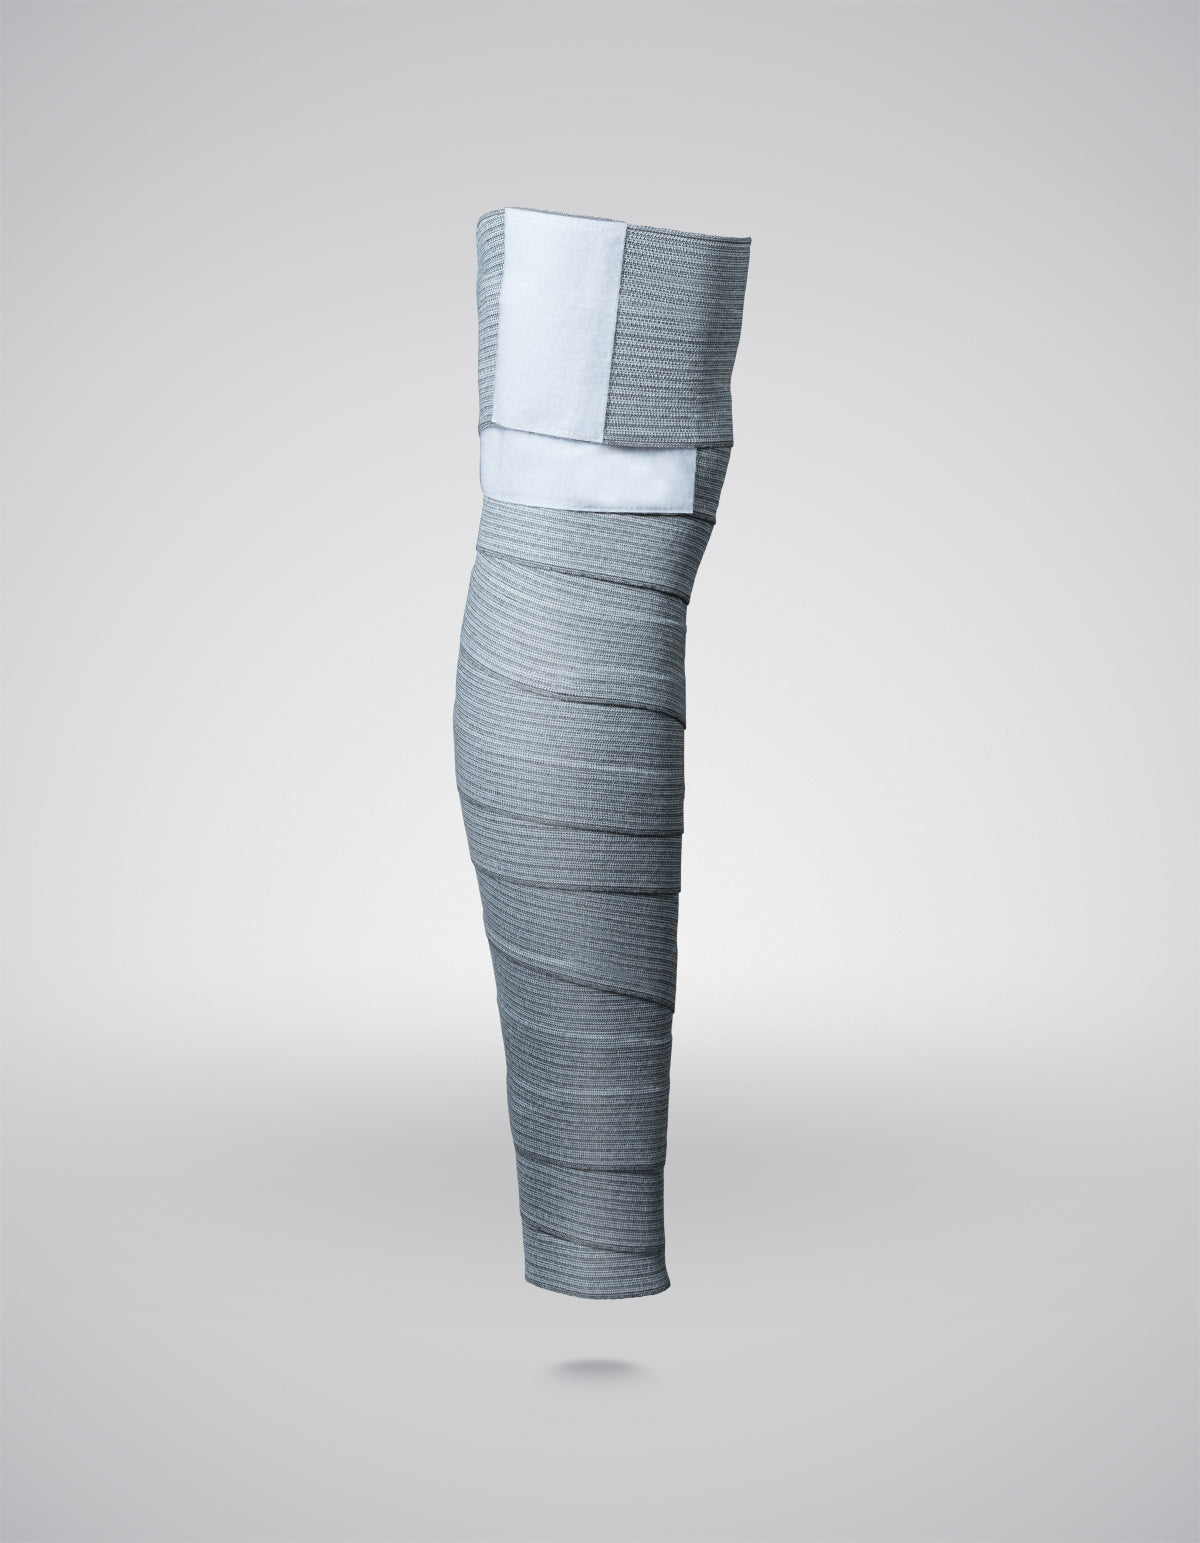 Increvable : Bandage Plein Greentyre FOY Gris - 2.80/2.50-4